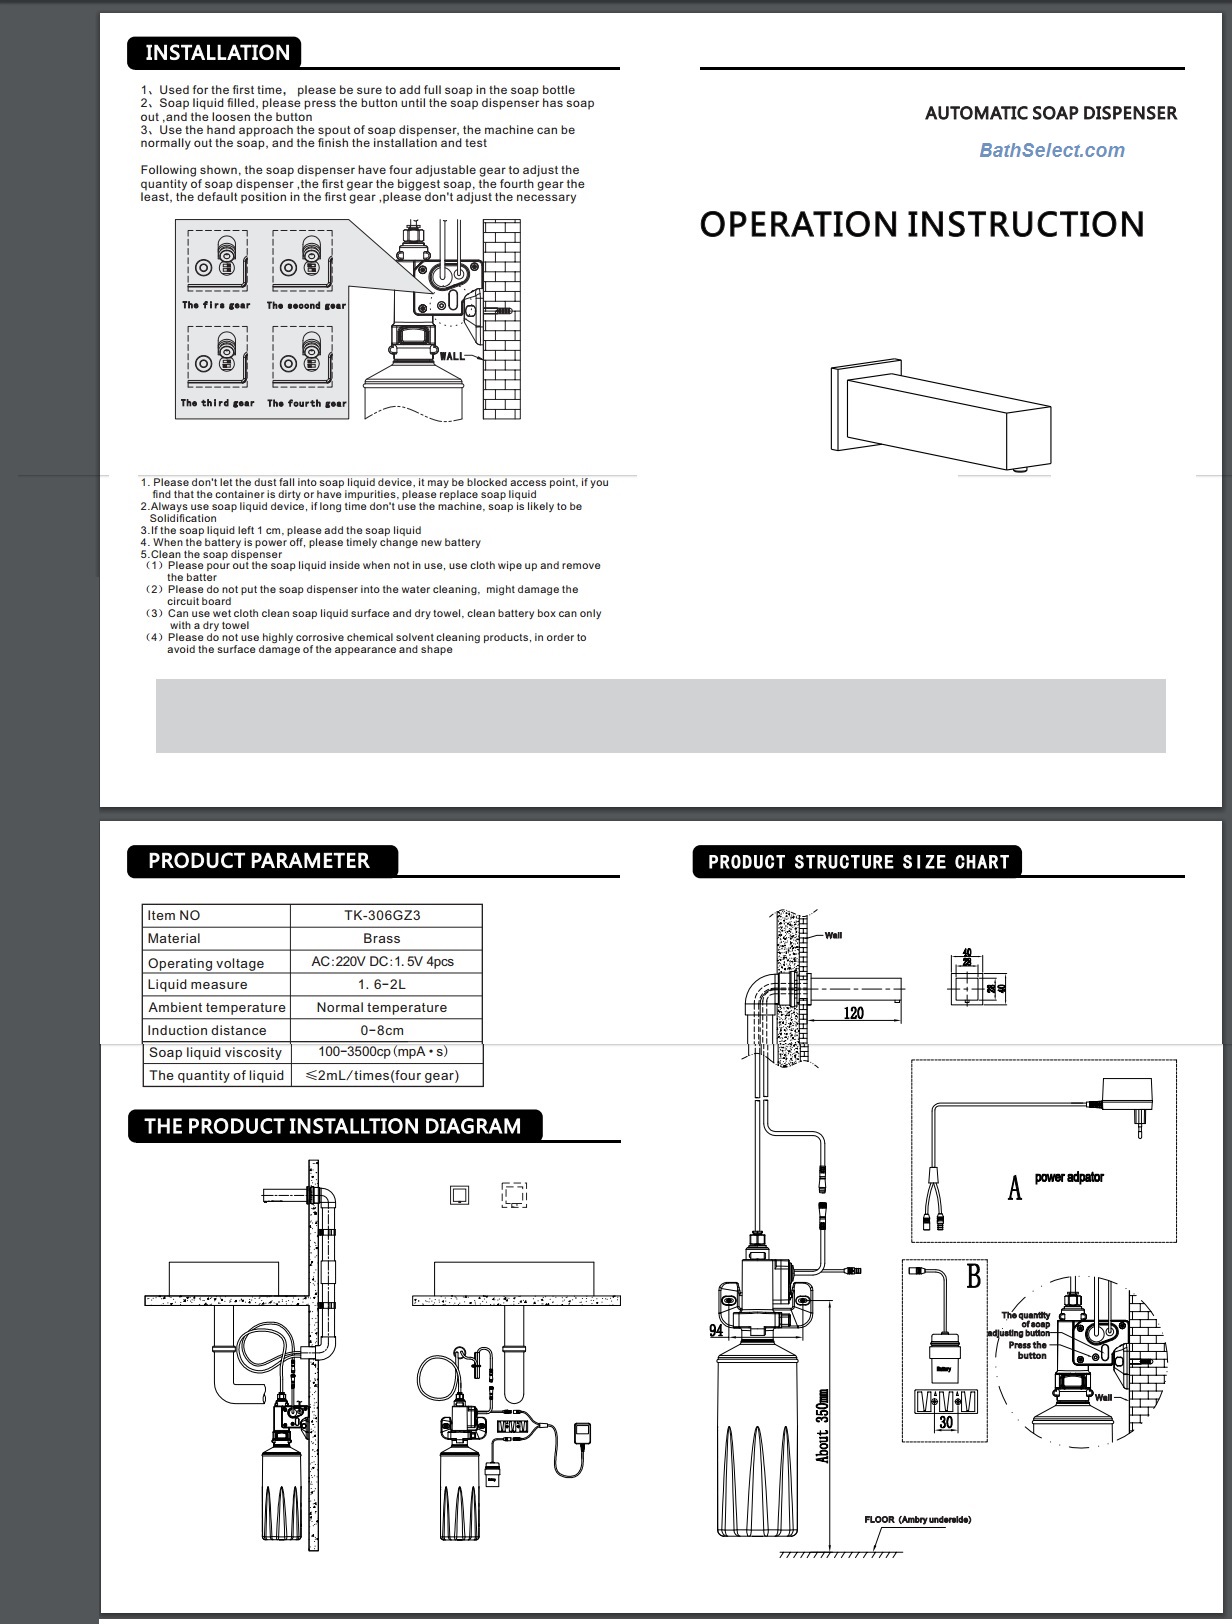 openstep installation instructions